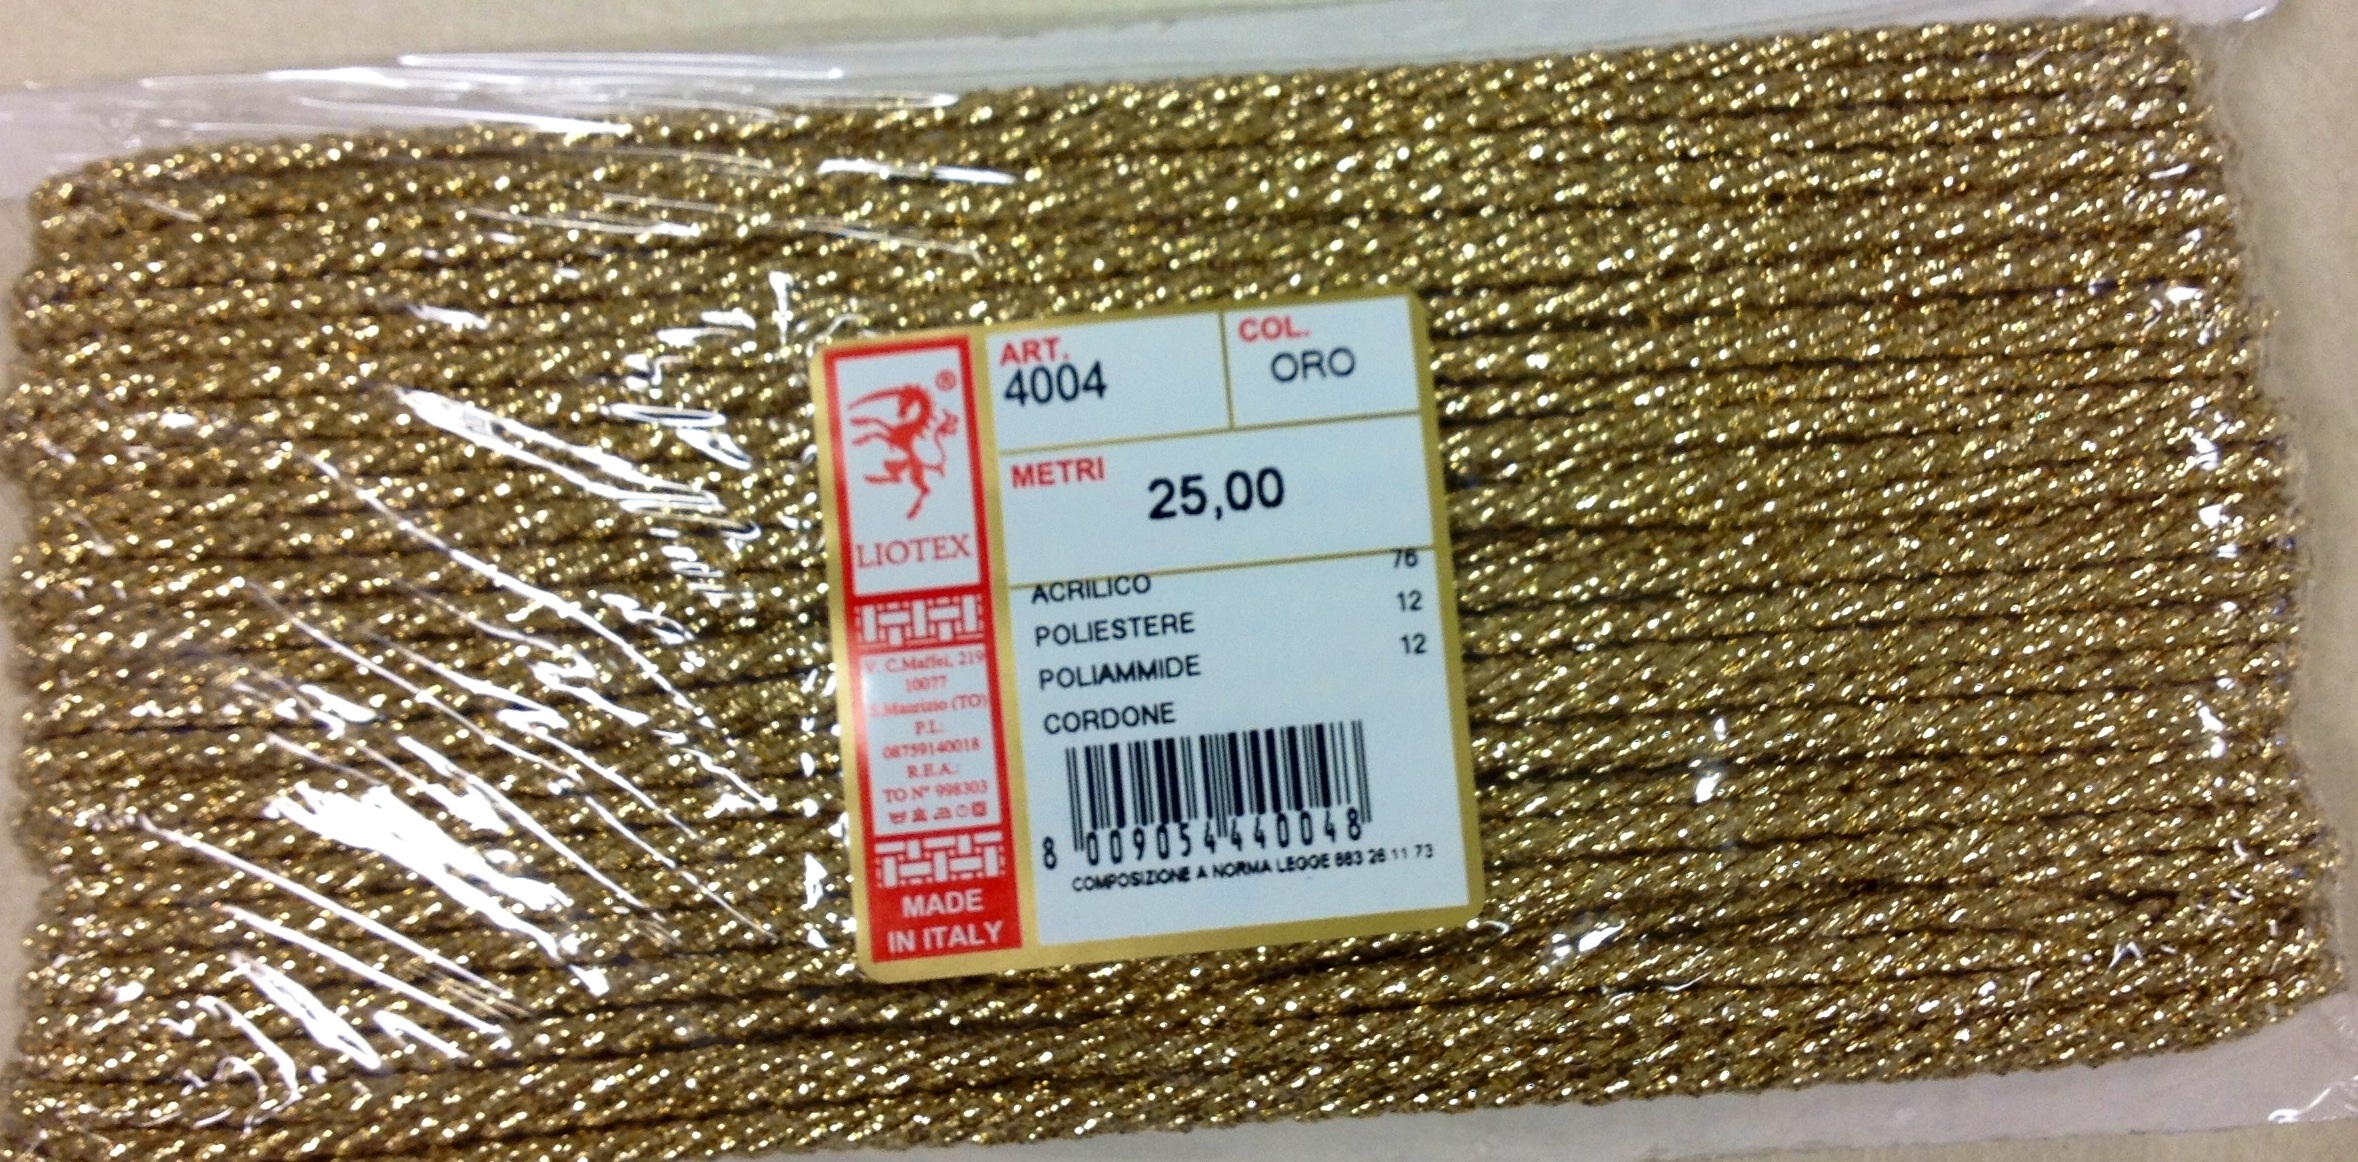 Cordone liotex 4004 oro